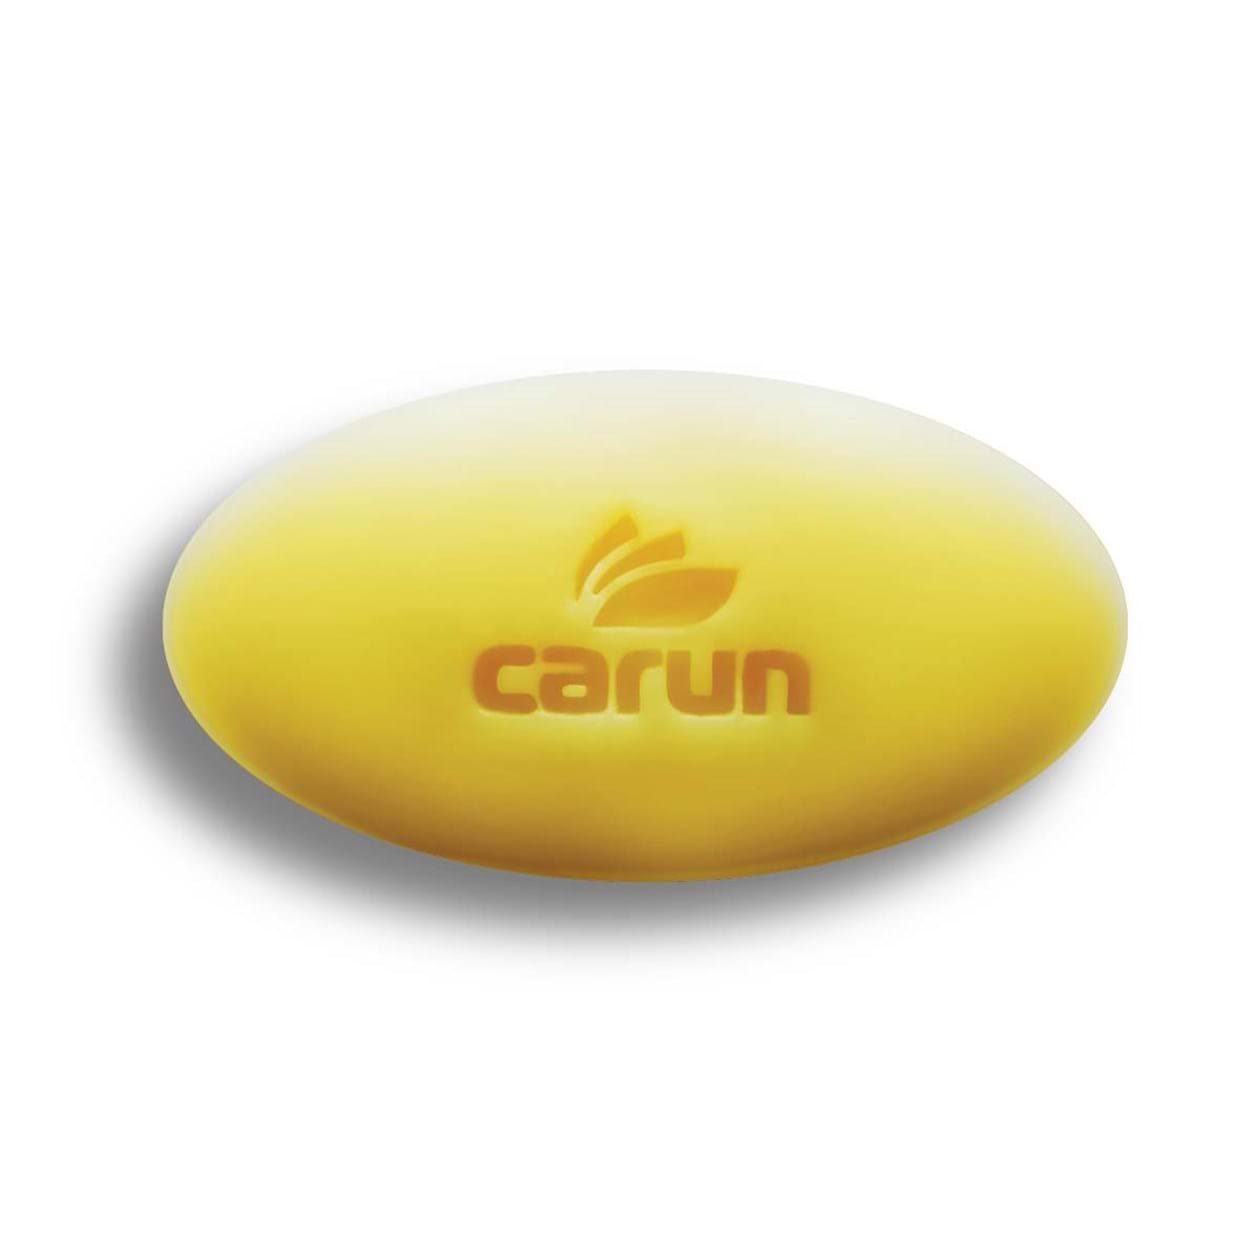 Carun Hemp Soap (CB2 natural formula) (Deliver Product)